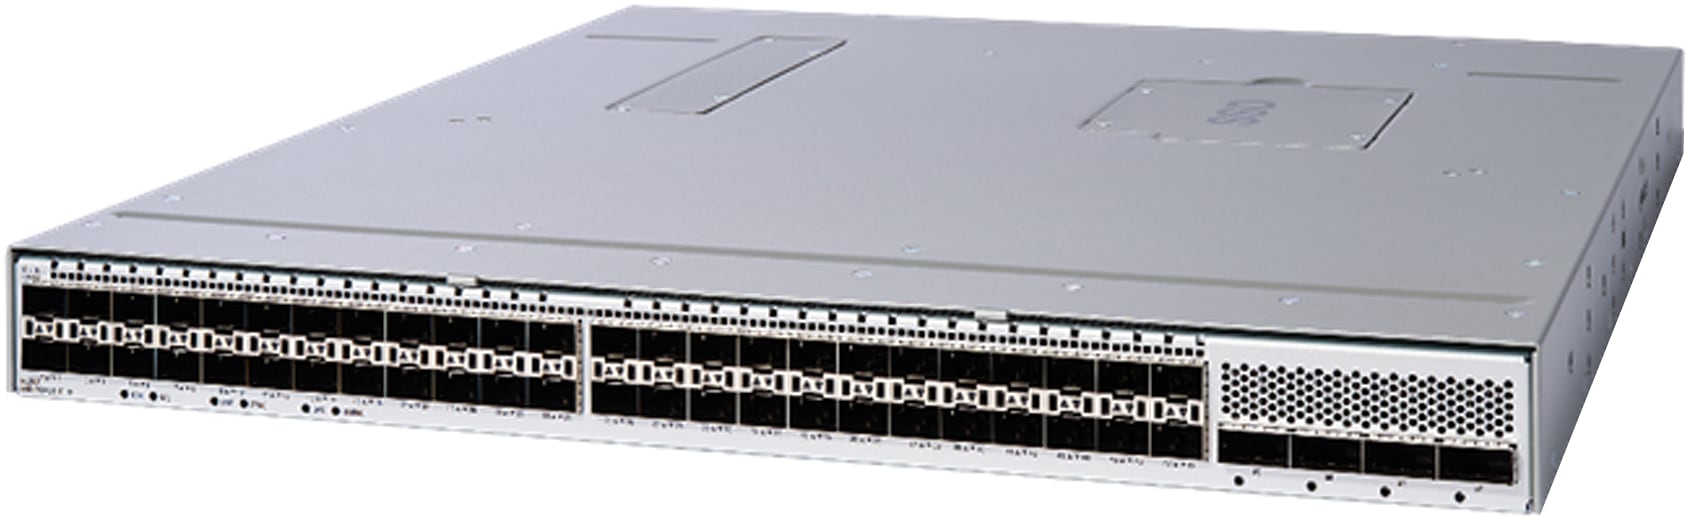 Cisco Nexus 93400LD-H1 Switch, front view